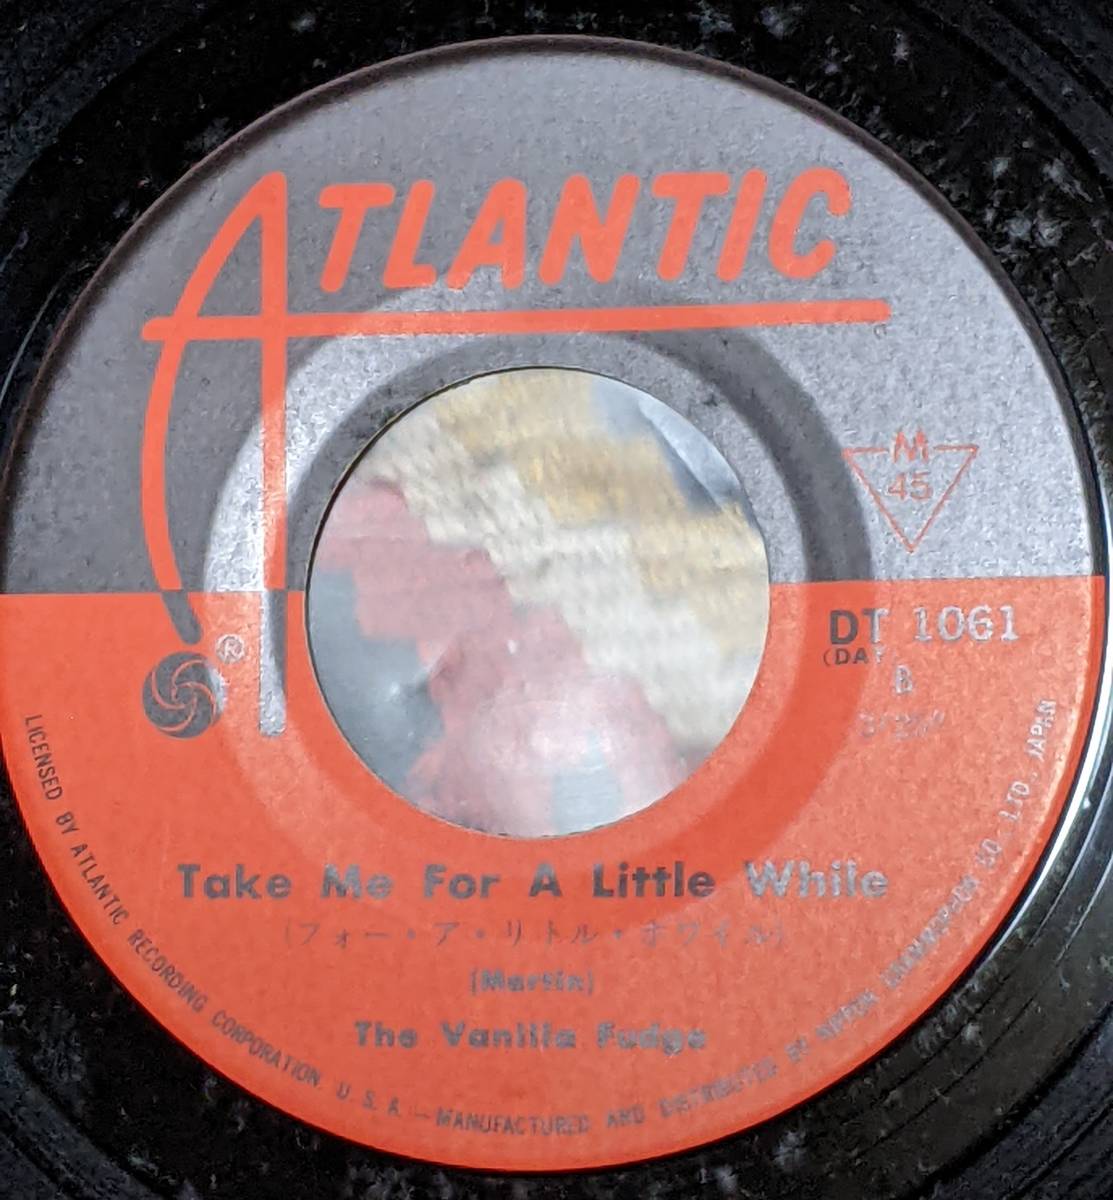 60's 　ヴァニラ・ファッジ Vanilla Fudge (国内盤\400 グラモフォン盤 7inch)/ キープ・ミー・ハンギング・オン Atlantic DT-1061 1968年_画像5